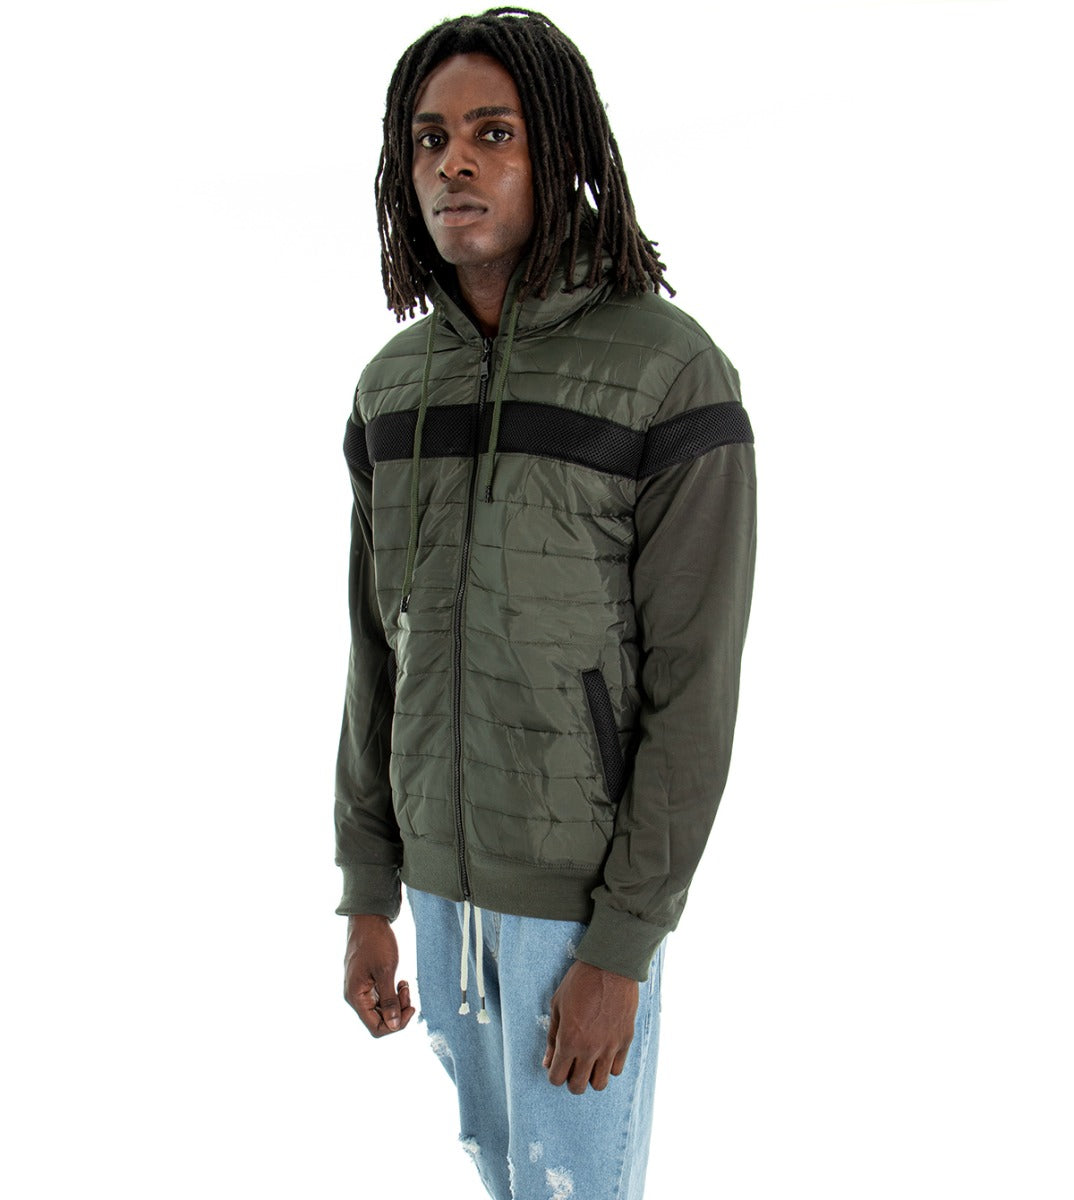 Men's Bomber Jacket Long Sleeves Green Hood Solid Color Stripe GIOSAL